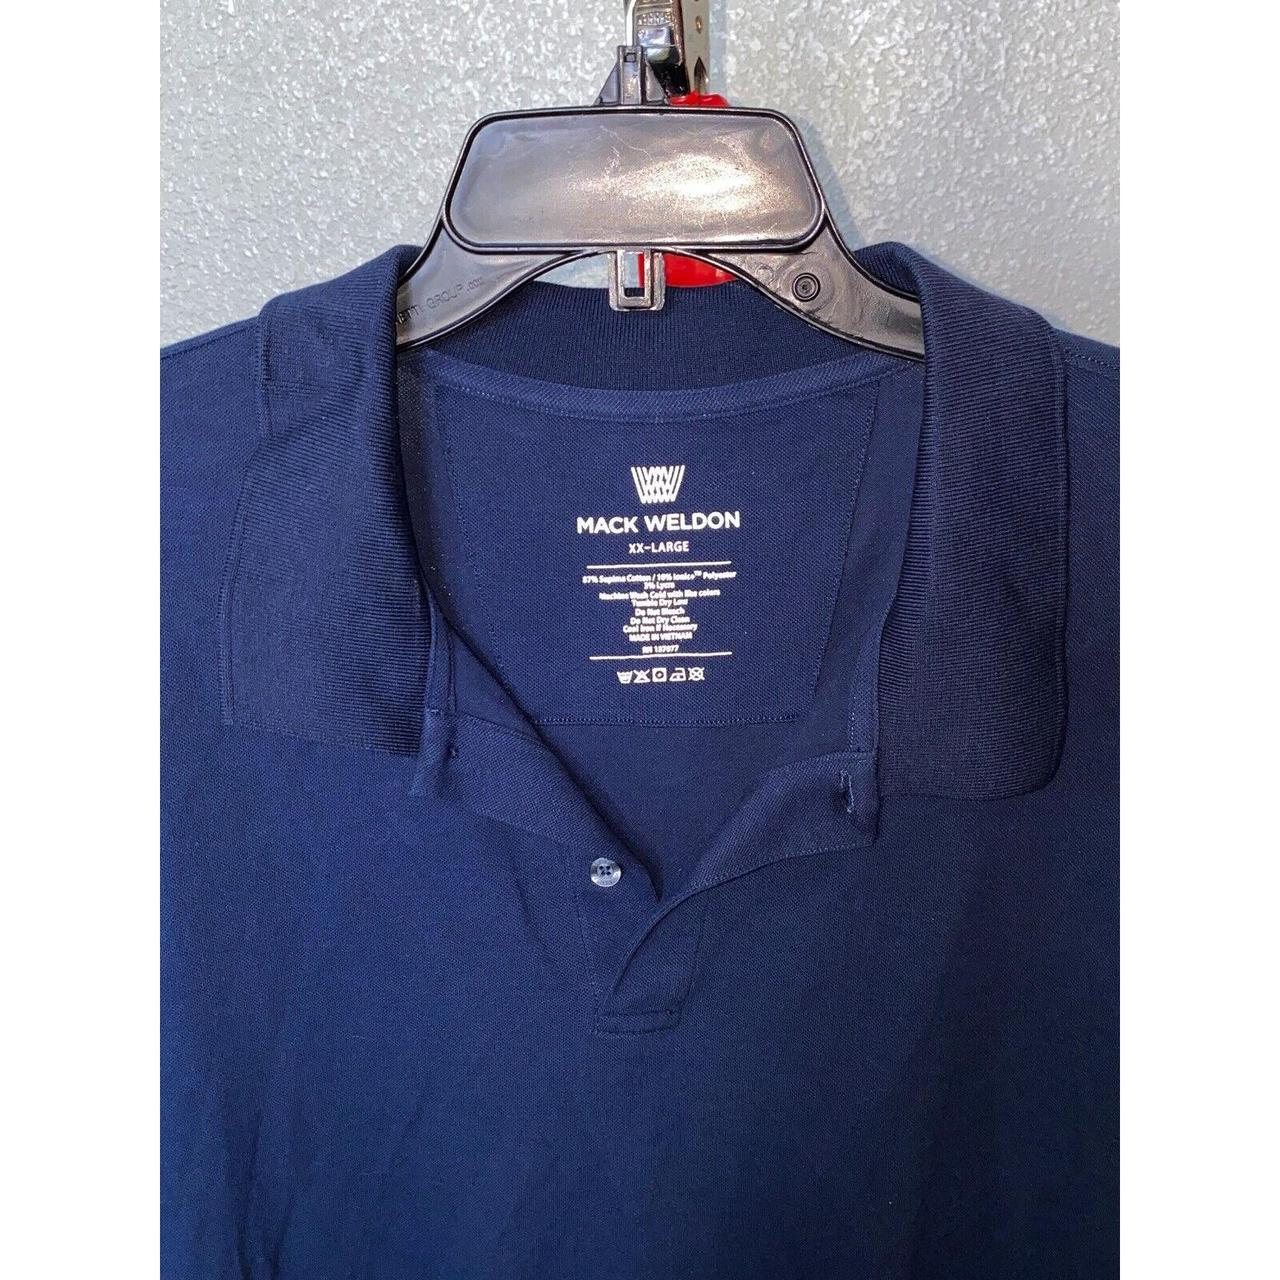 Mack Weldon Men's Blue and Navy Polo-shirts